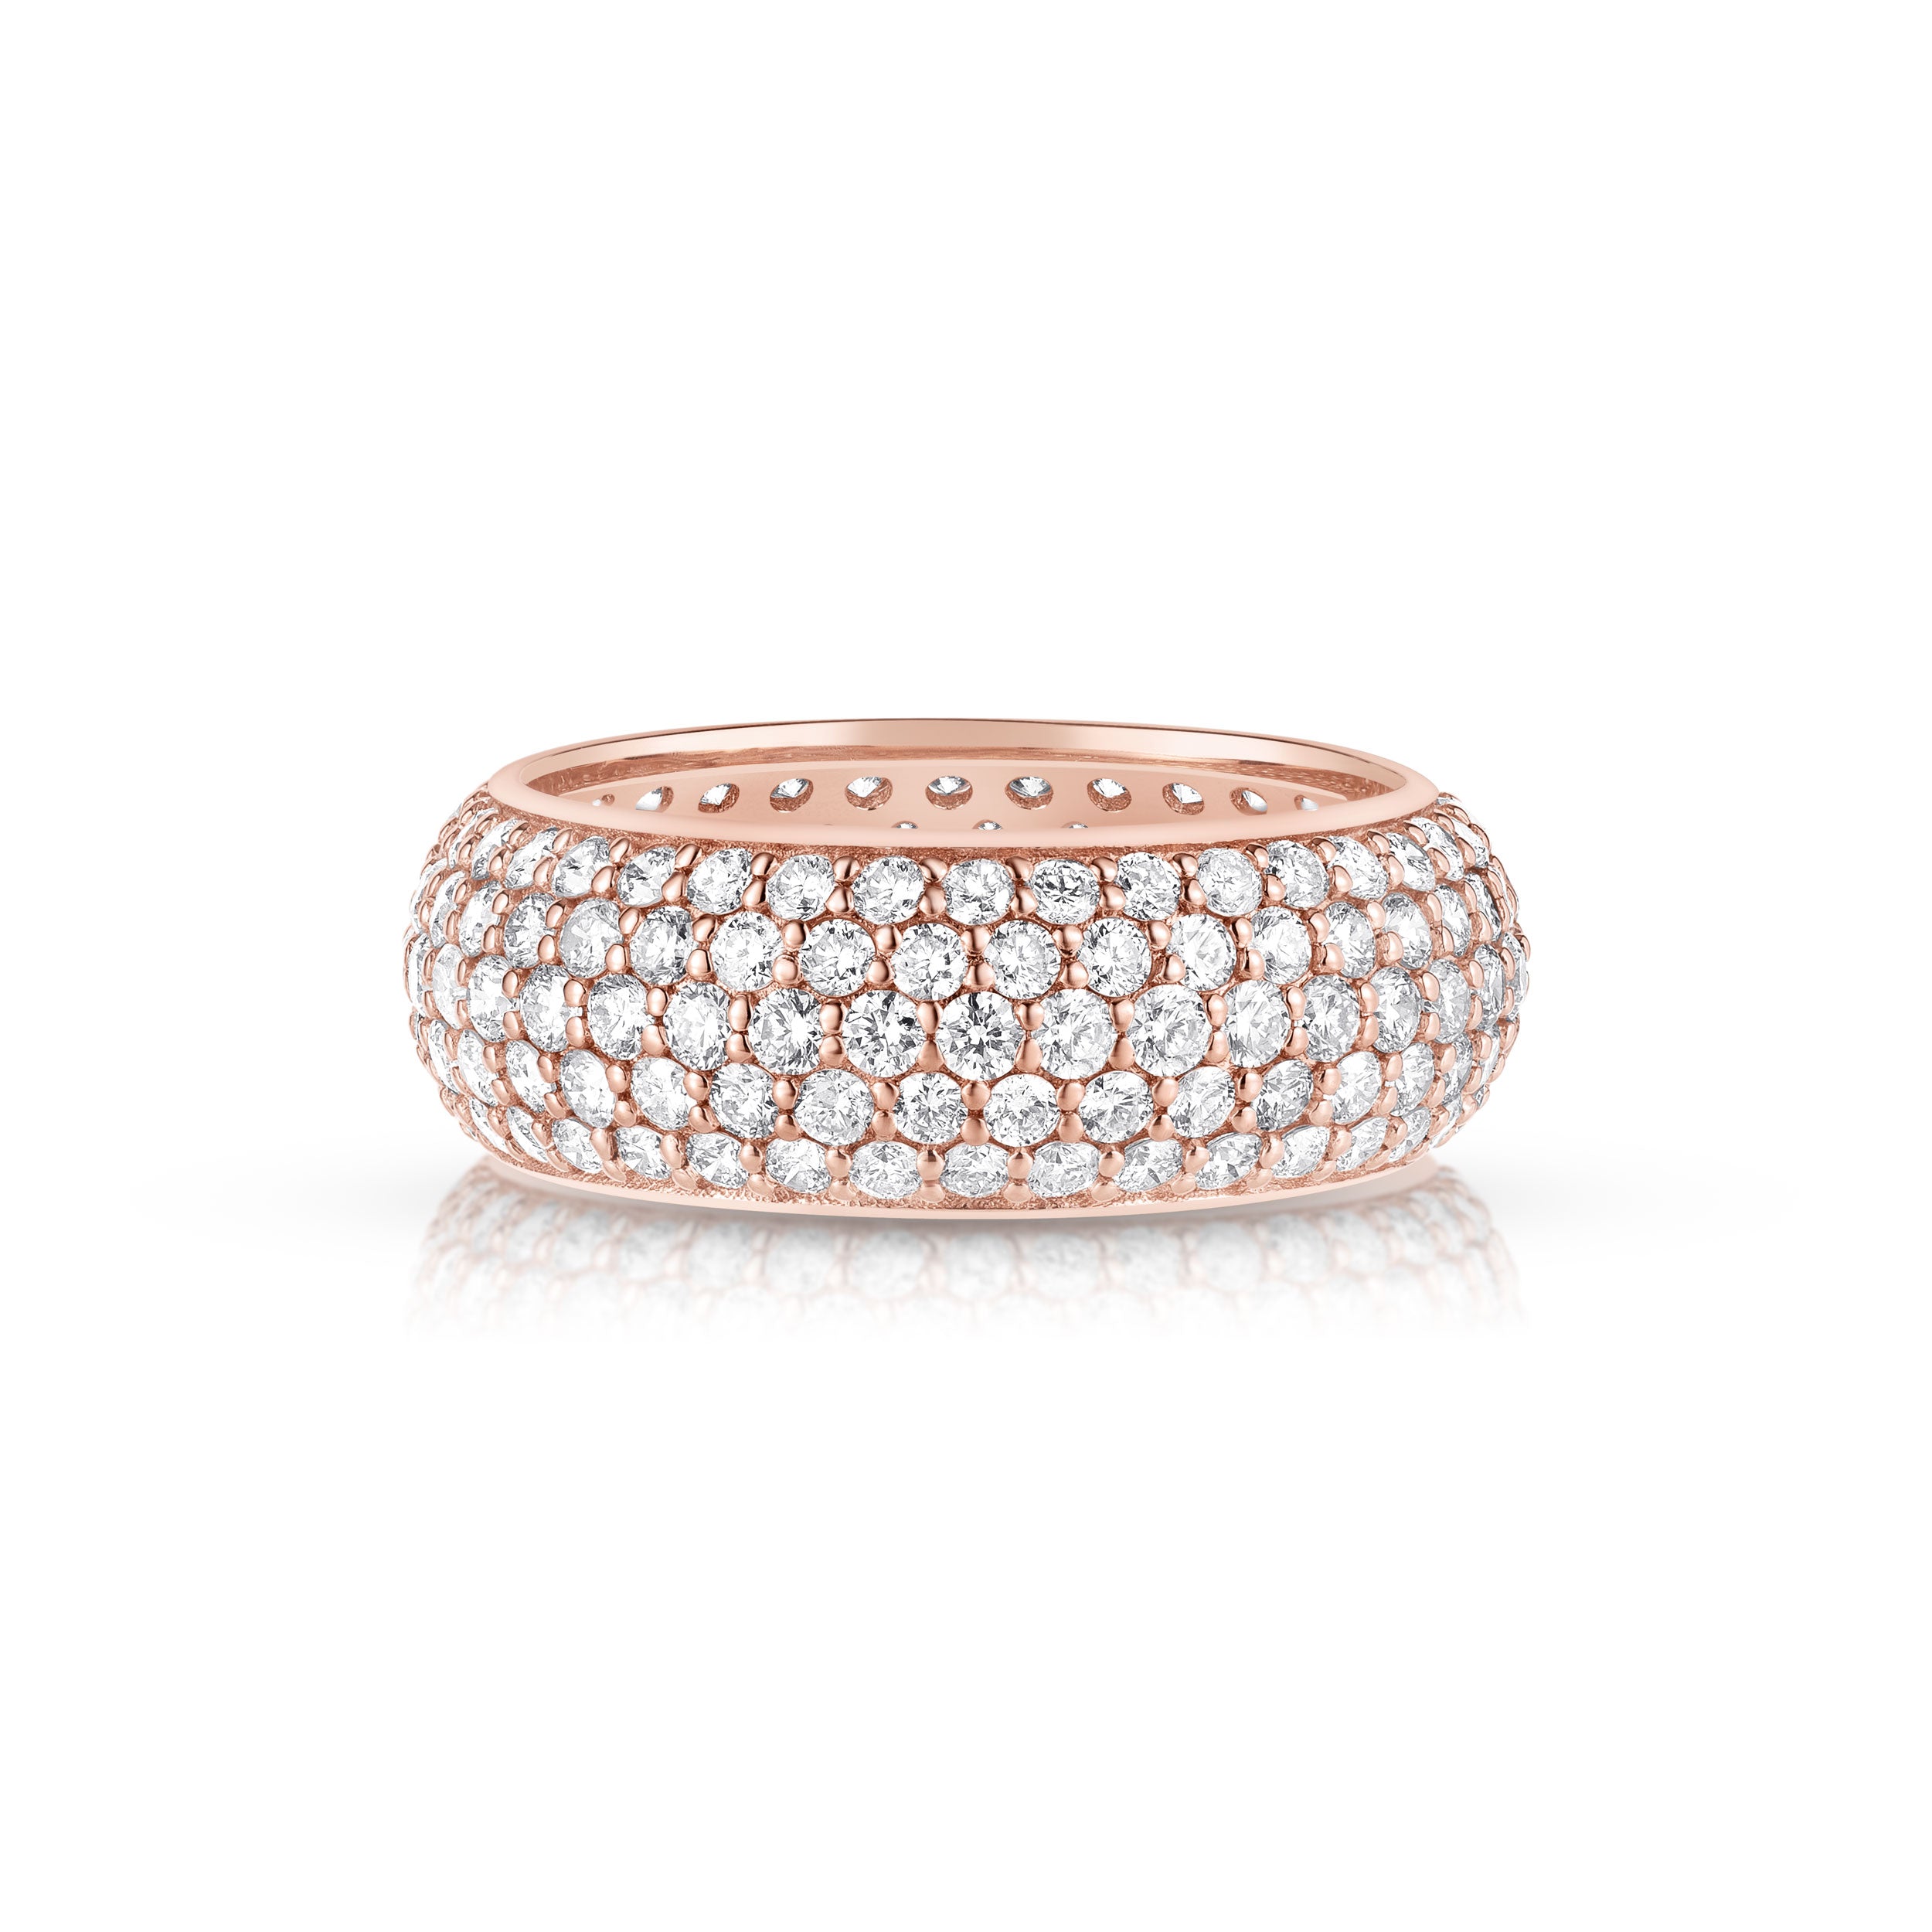 14K Rose Gold Pink Diamond Eternity Ring